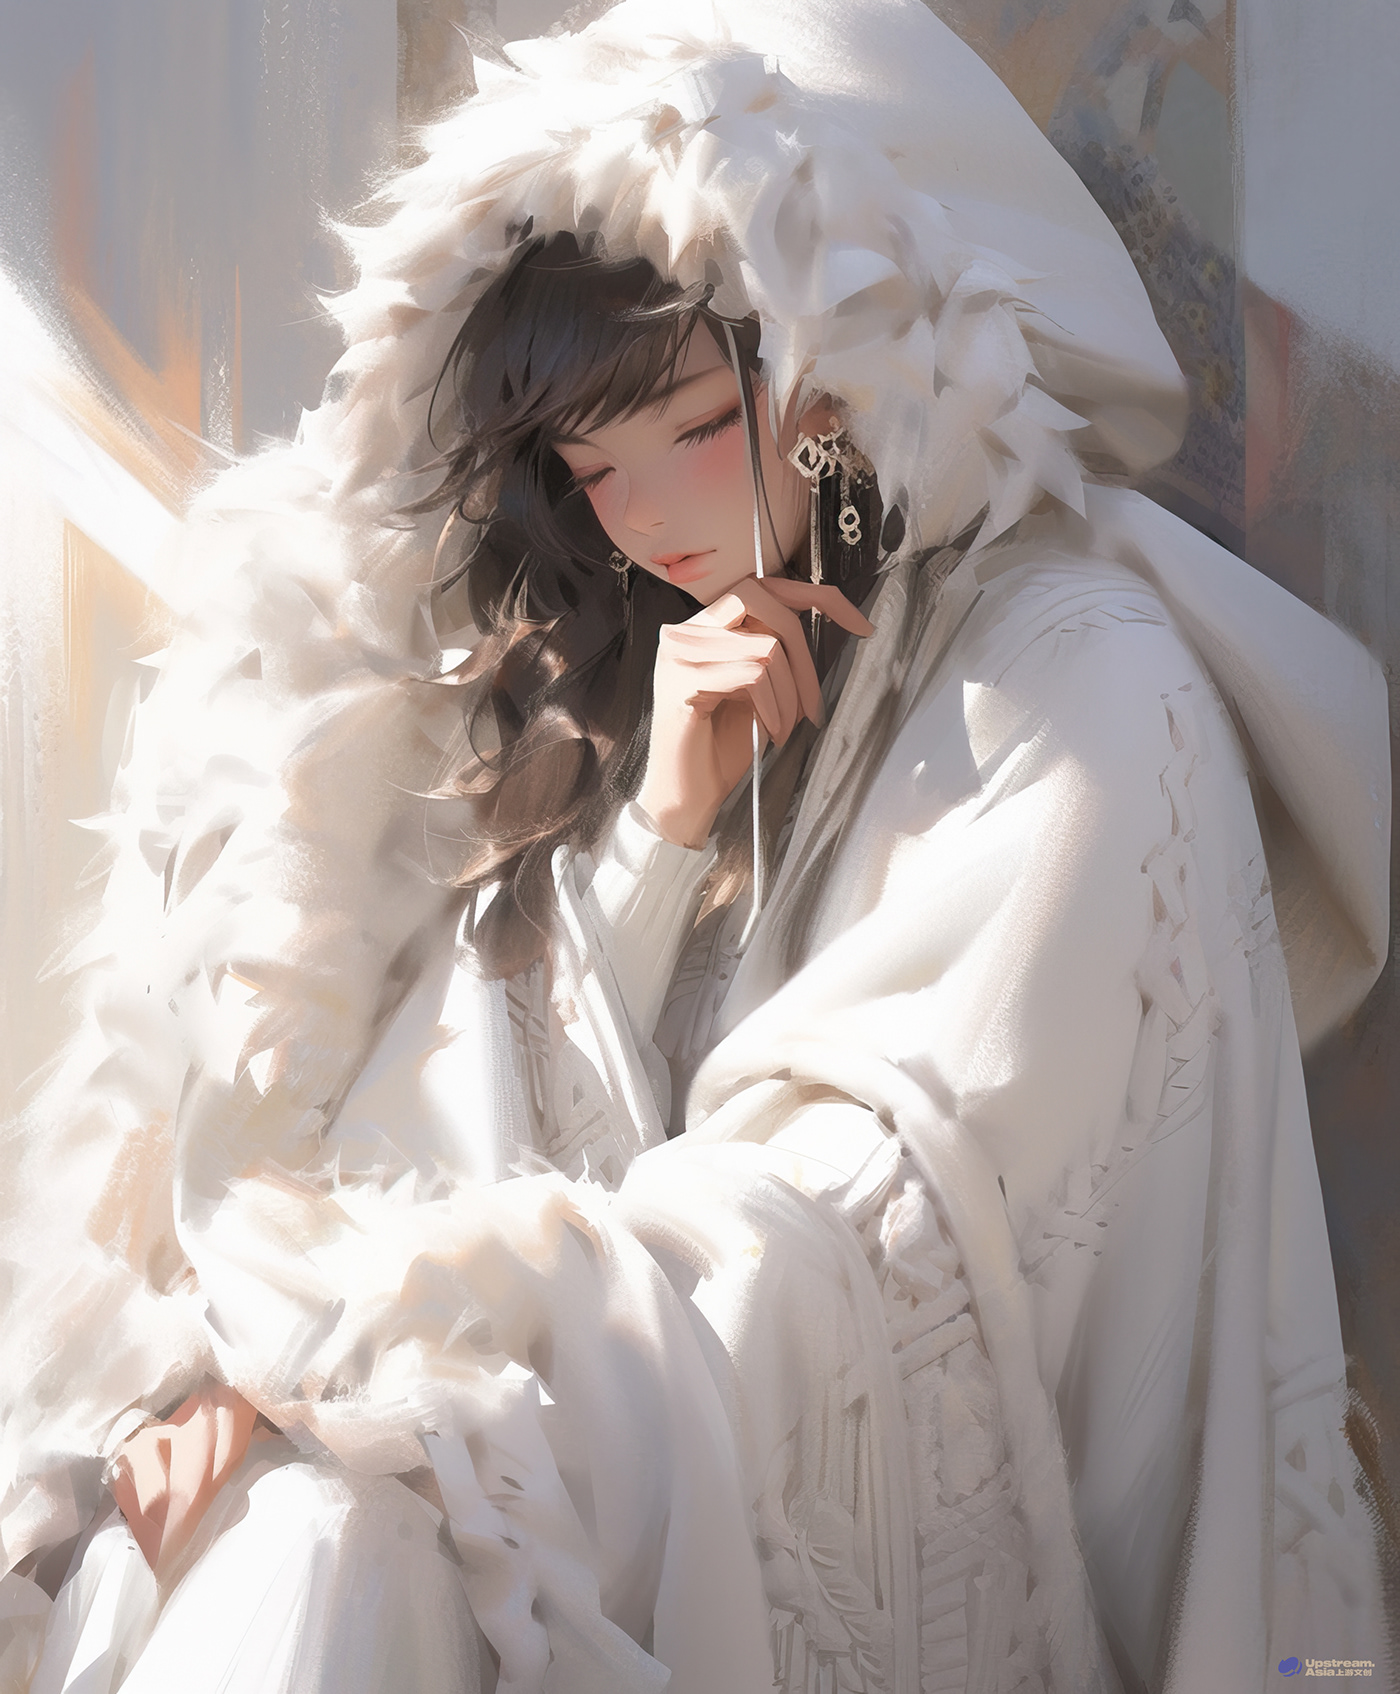 anime artwork portrait beauty angel fantasy digital illustration concept art